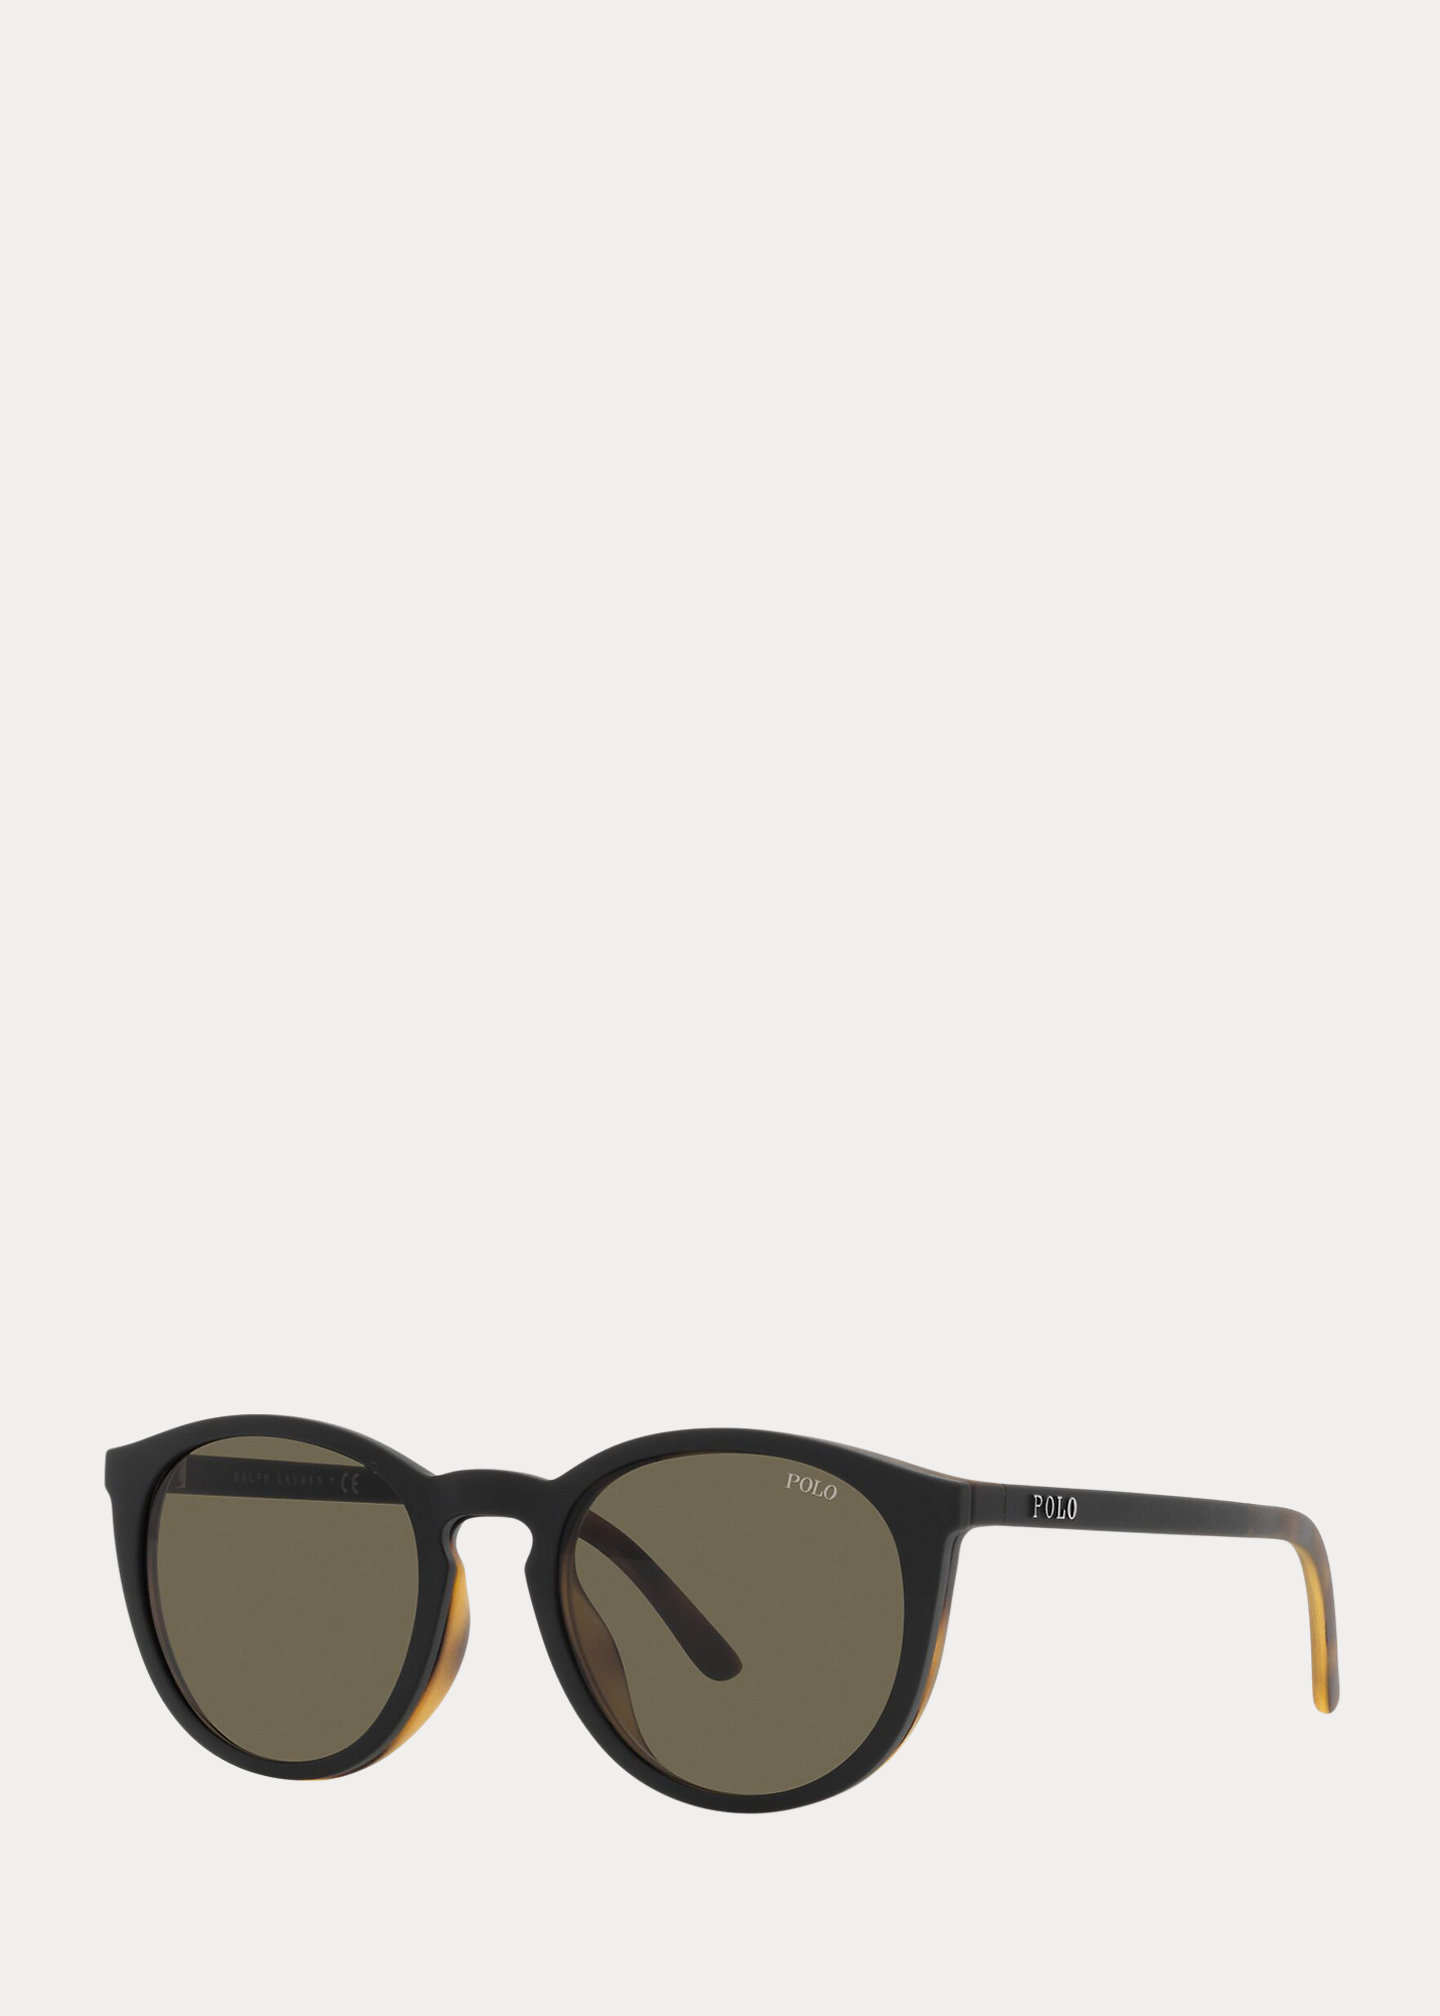 Panto Glasses with Sun Lenses, Ralph Lauren